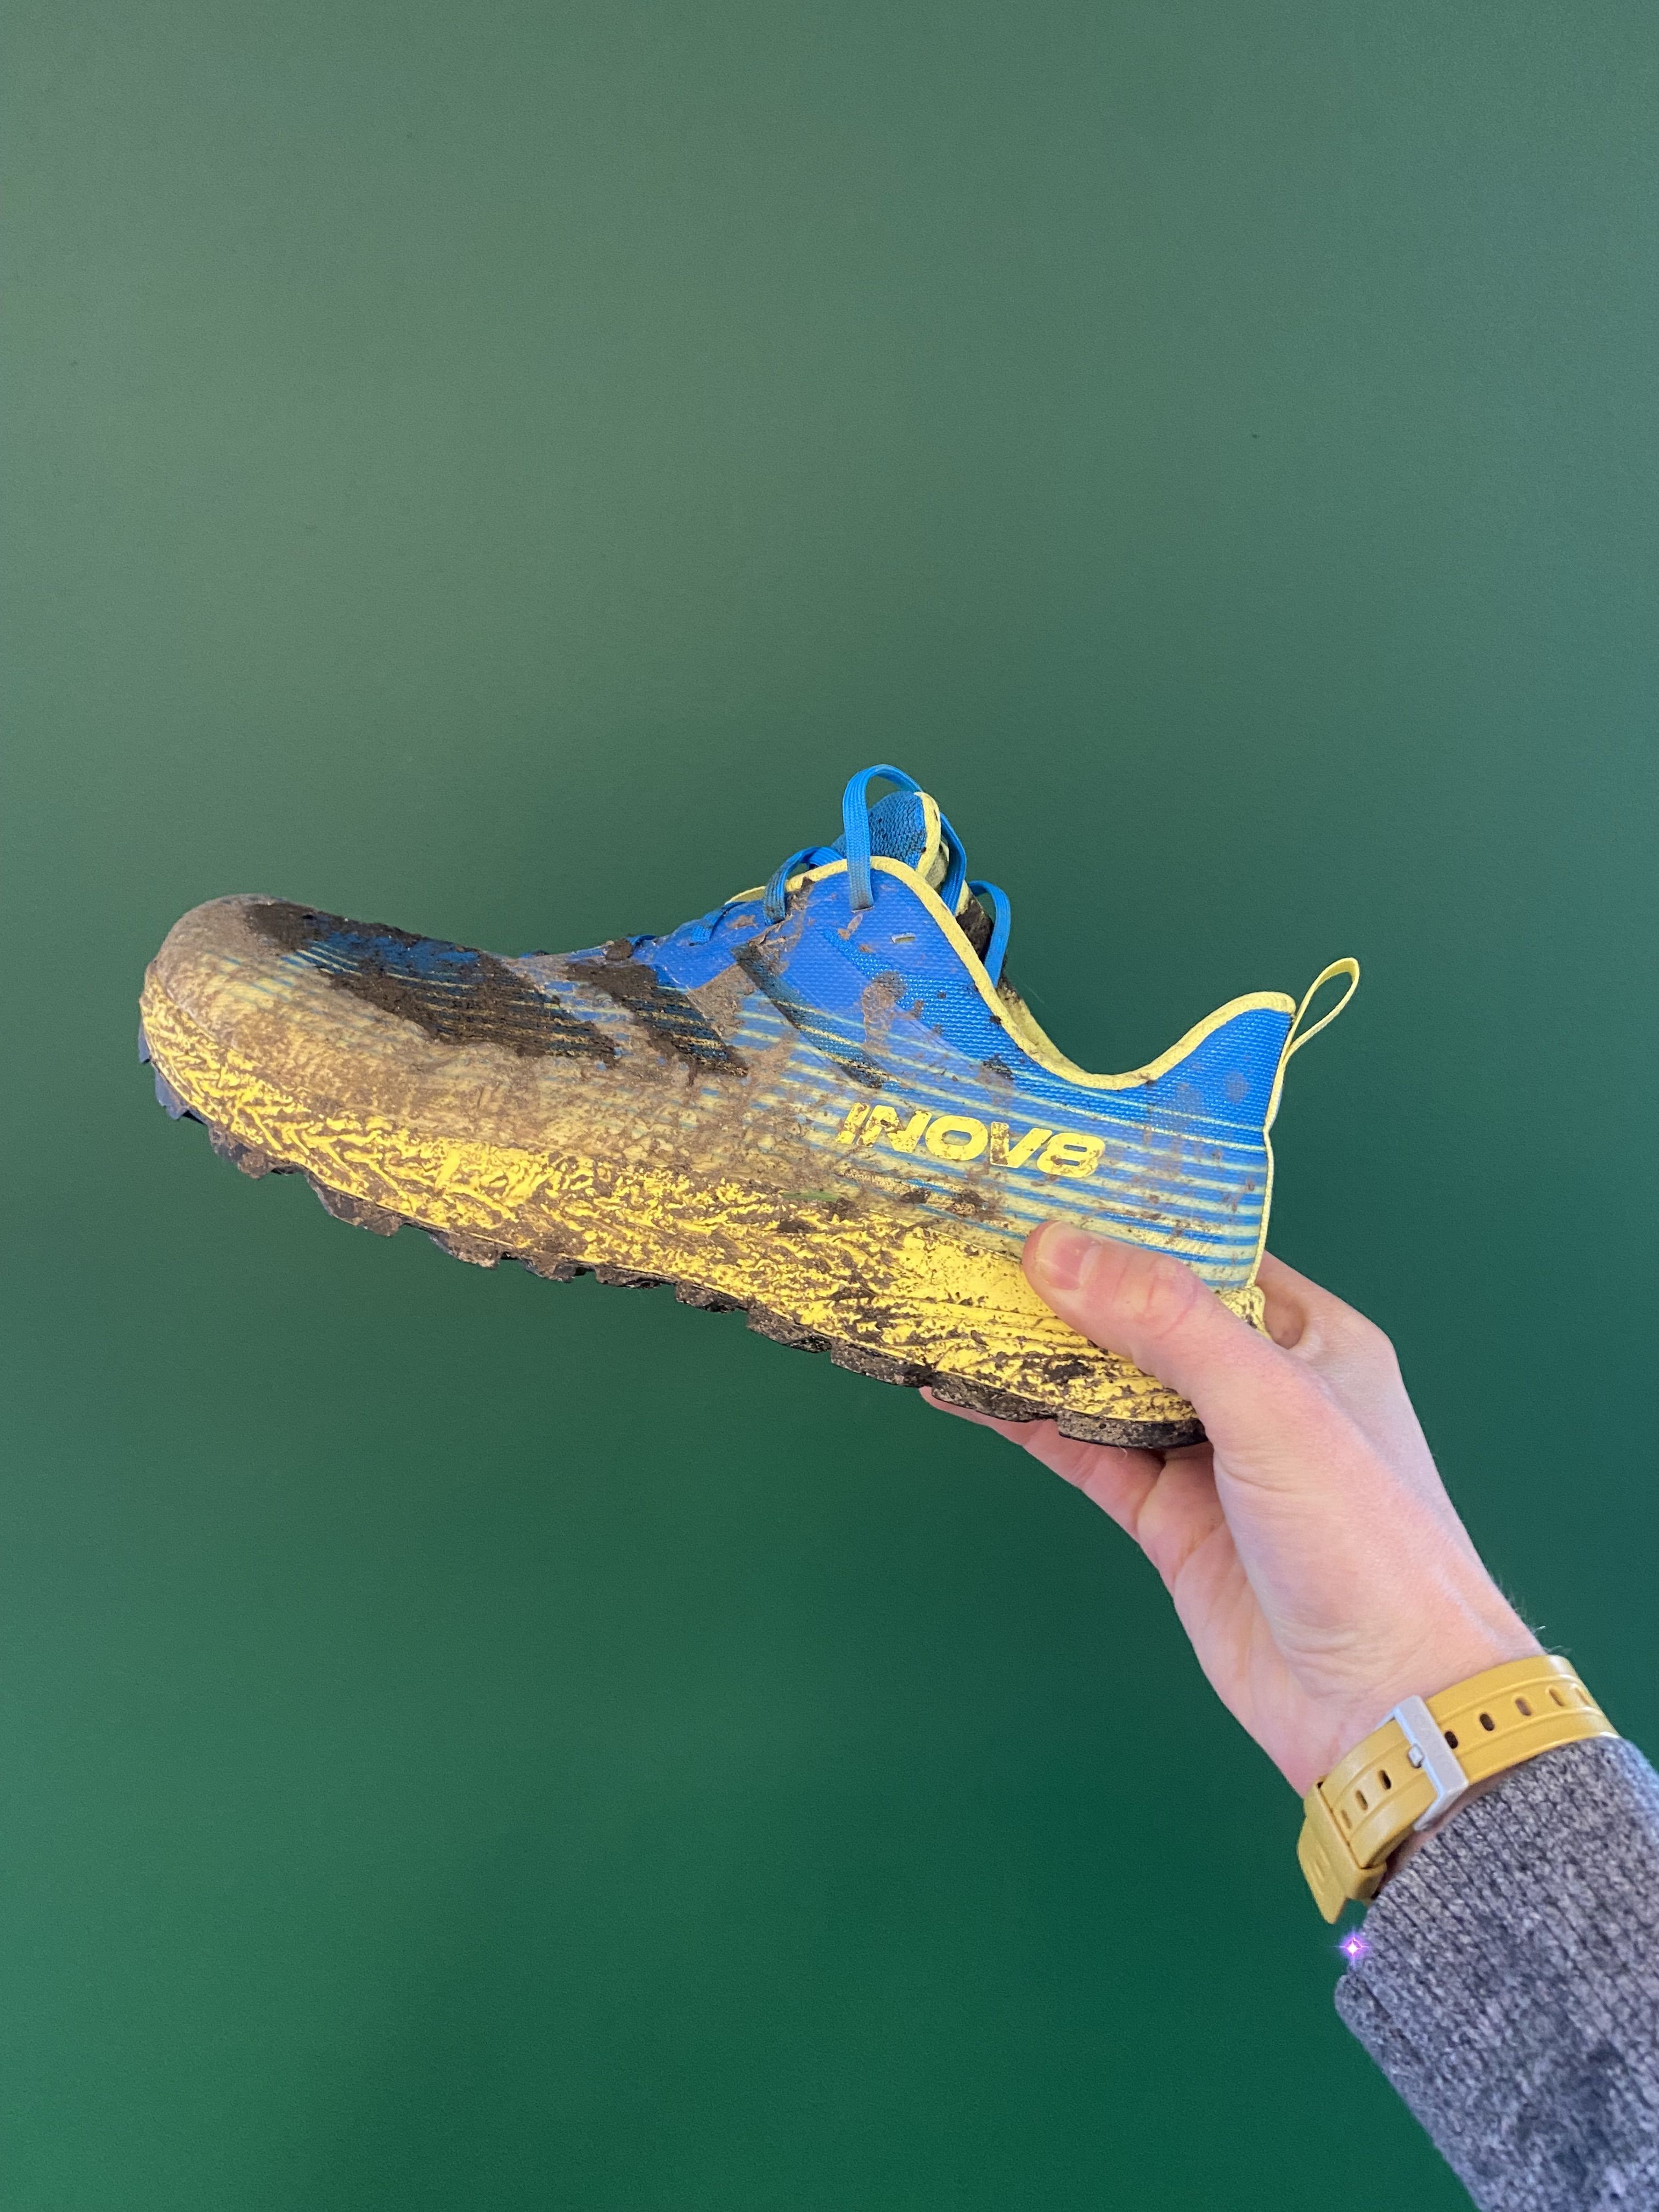 Nike hit back at Adidas in 'super shoe' war as Kelvin Kiptum shatters men's  marathon record